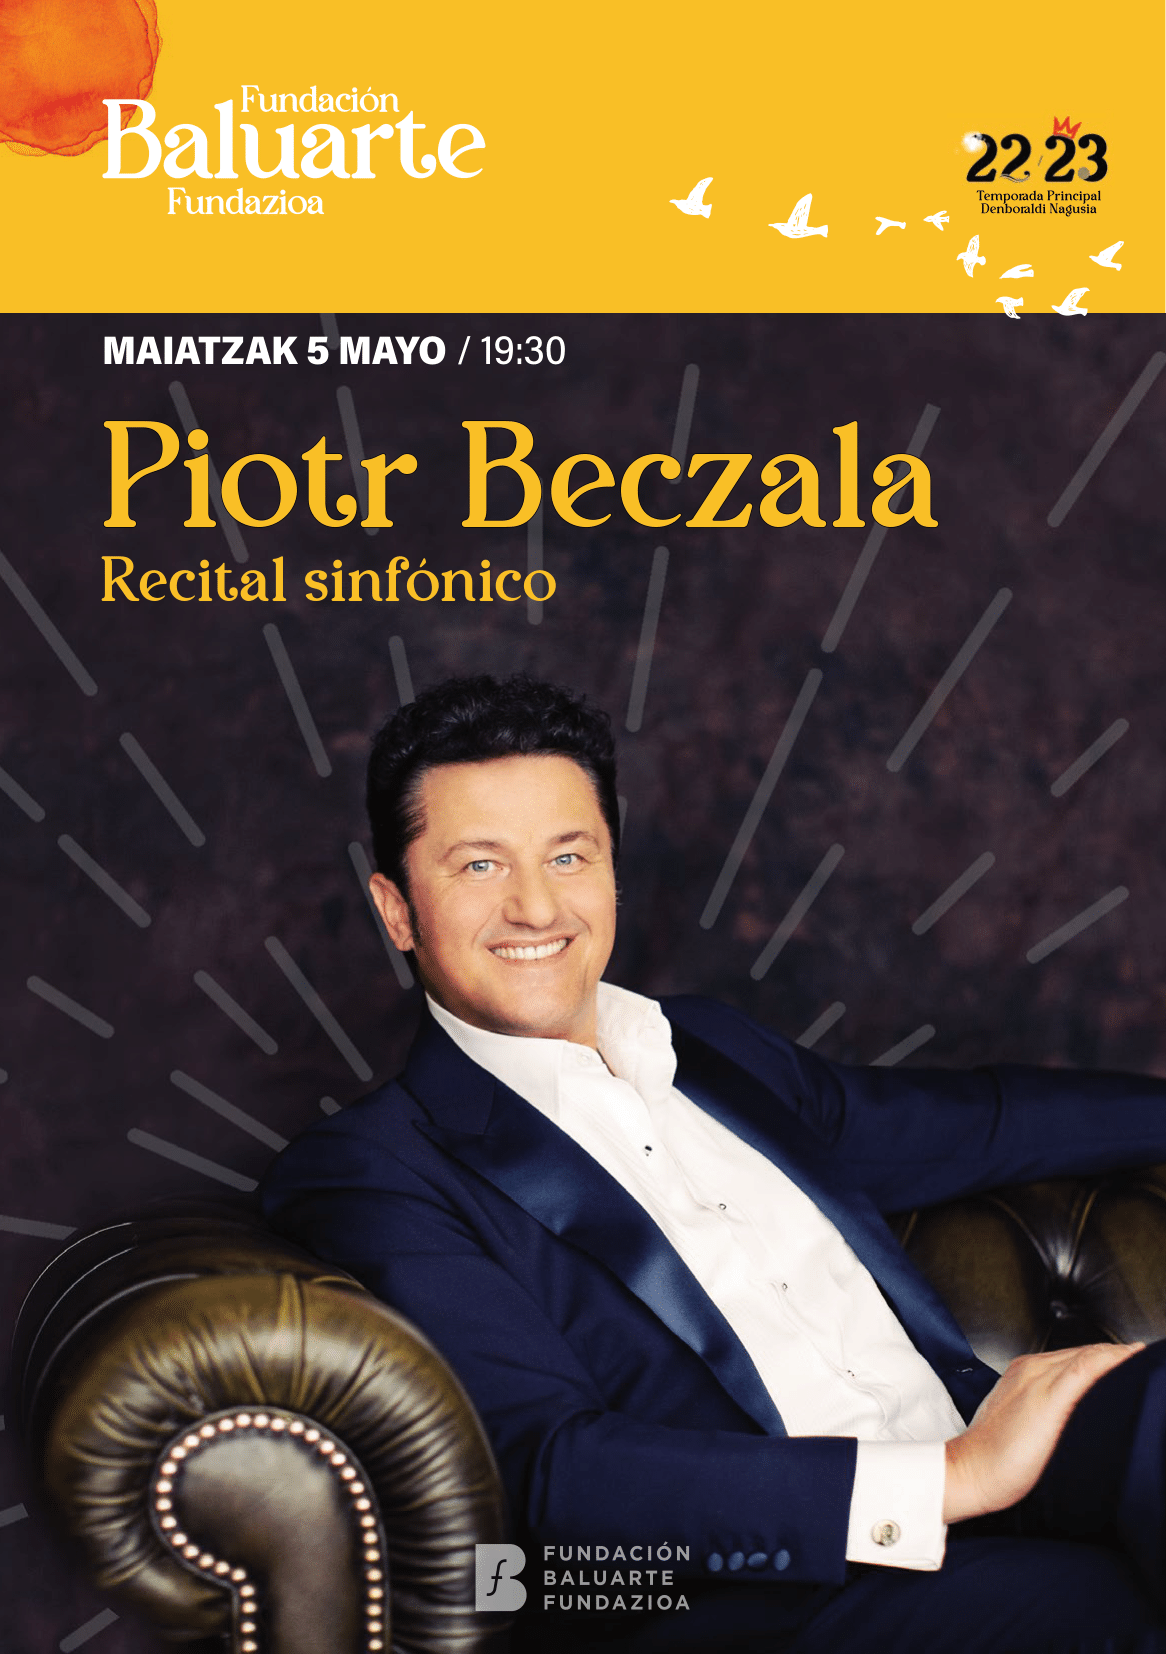 Piotr Beczała debuta este viernes en Baluarte con un recital sinfónico que clausurará la temporada 22/23 de Fundación Baluarte